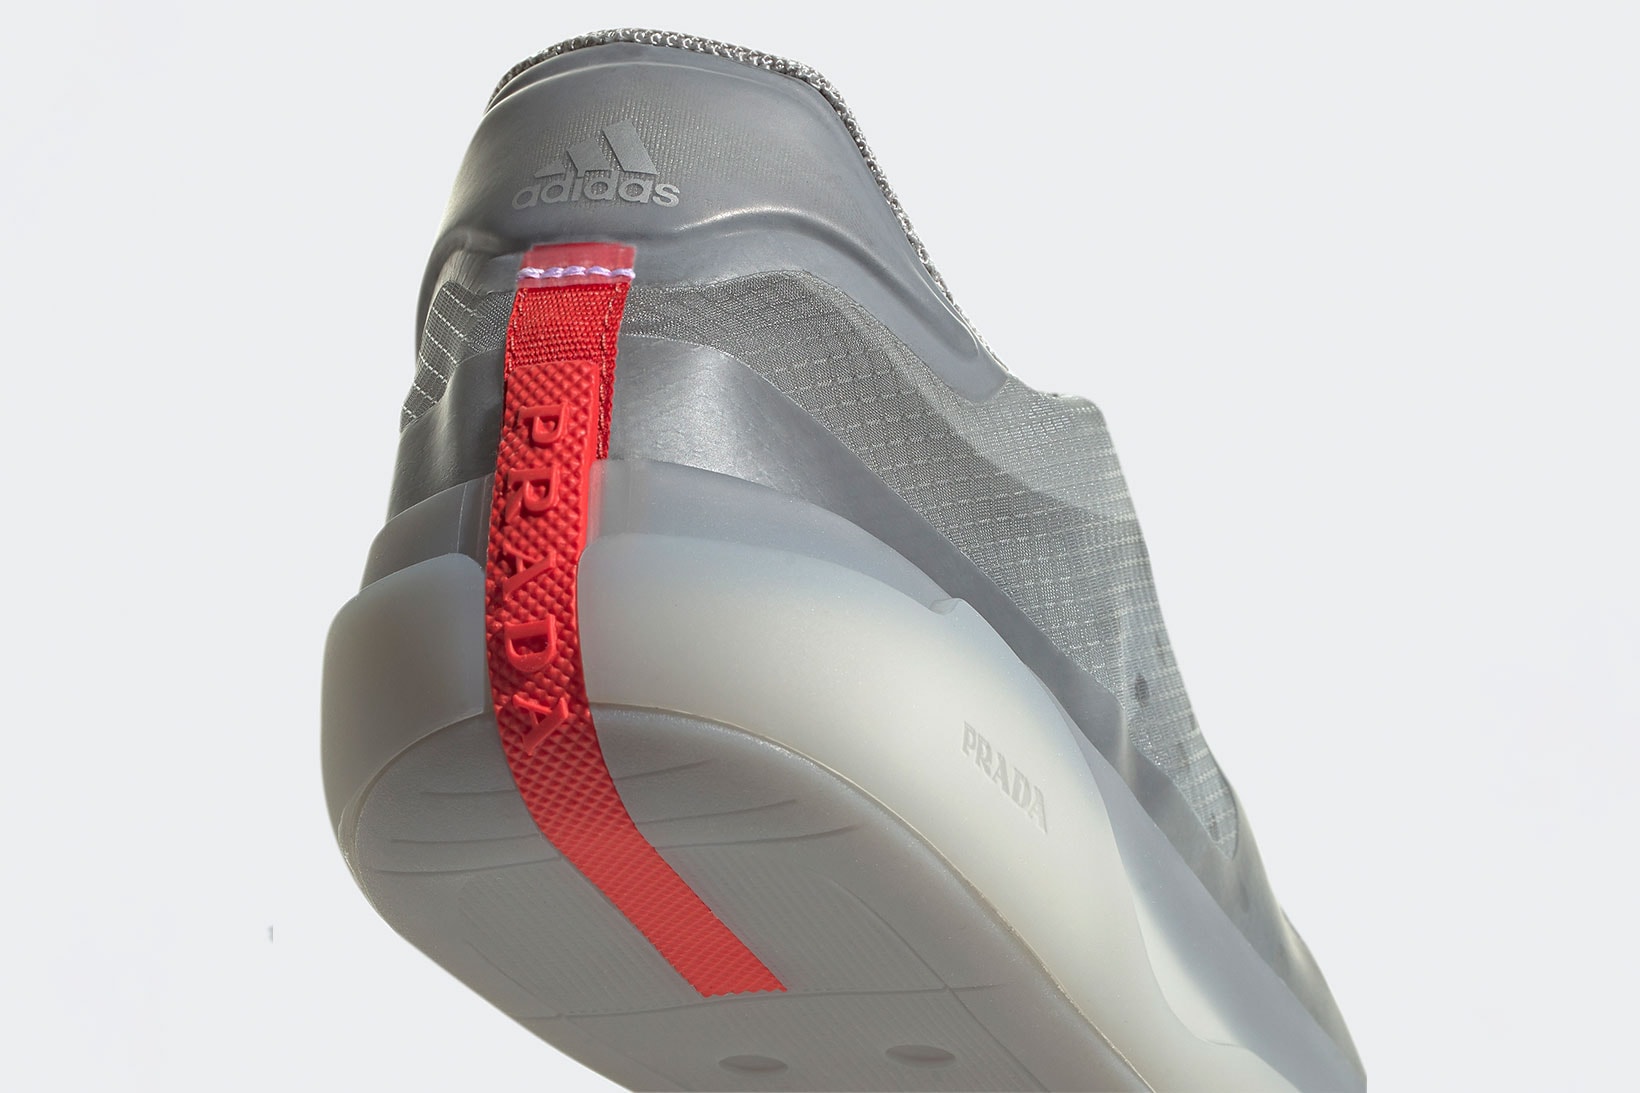 Prada adidas A+P LUNA ROSSA 21 Collaboration Gray Silver Heel